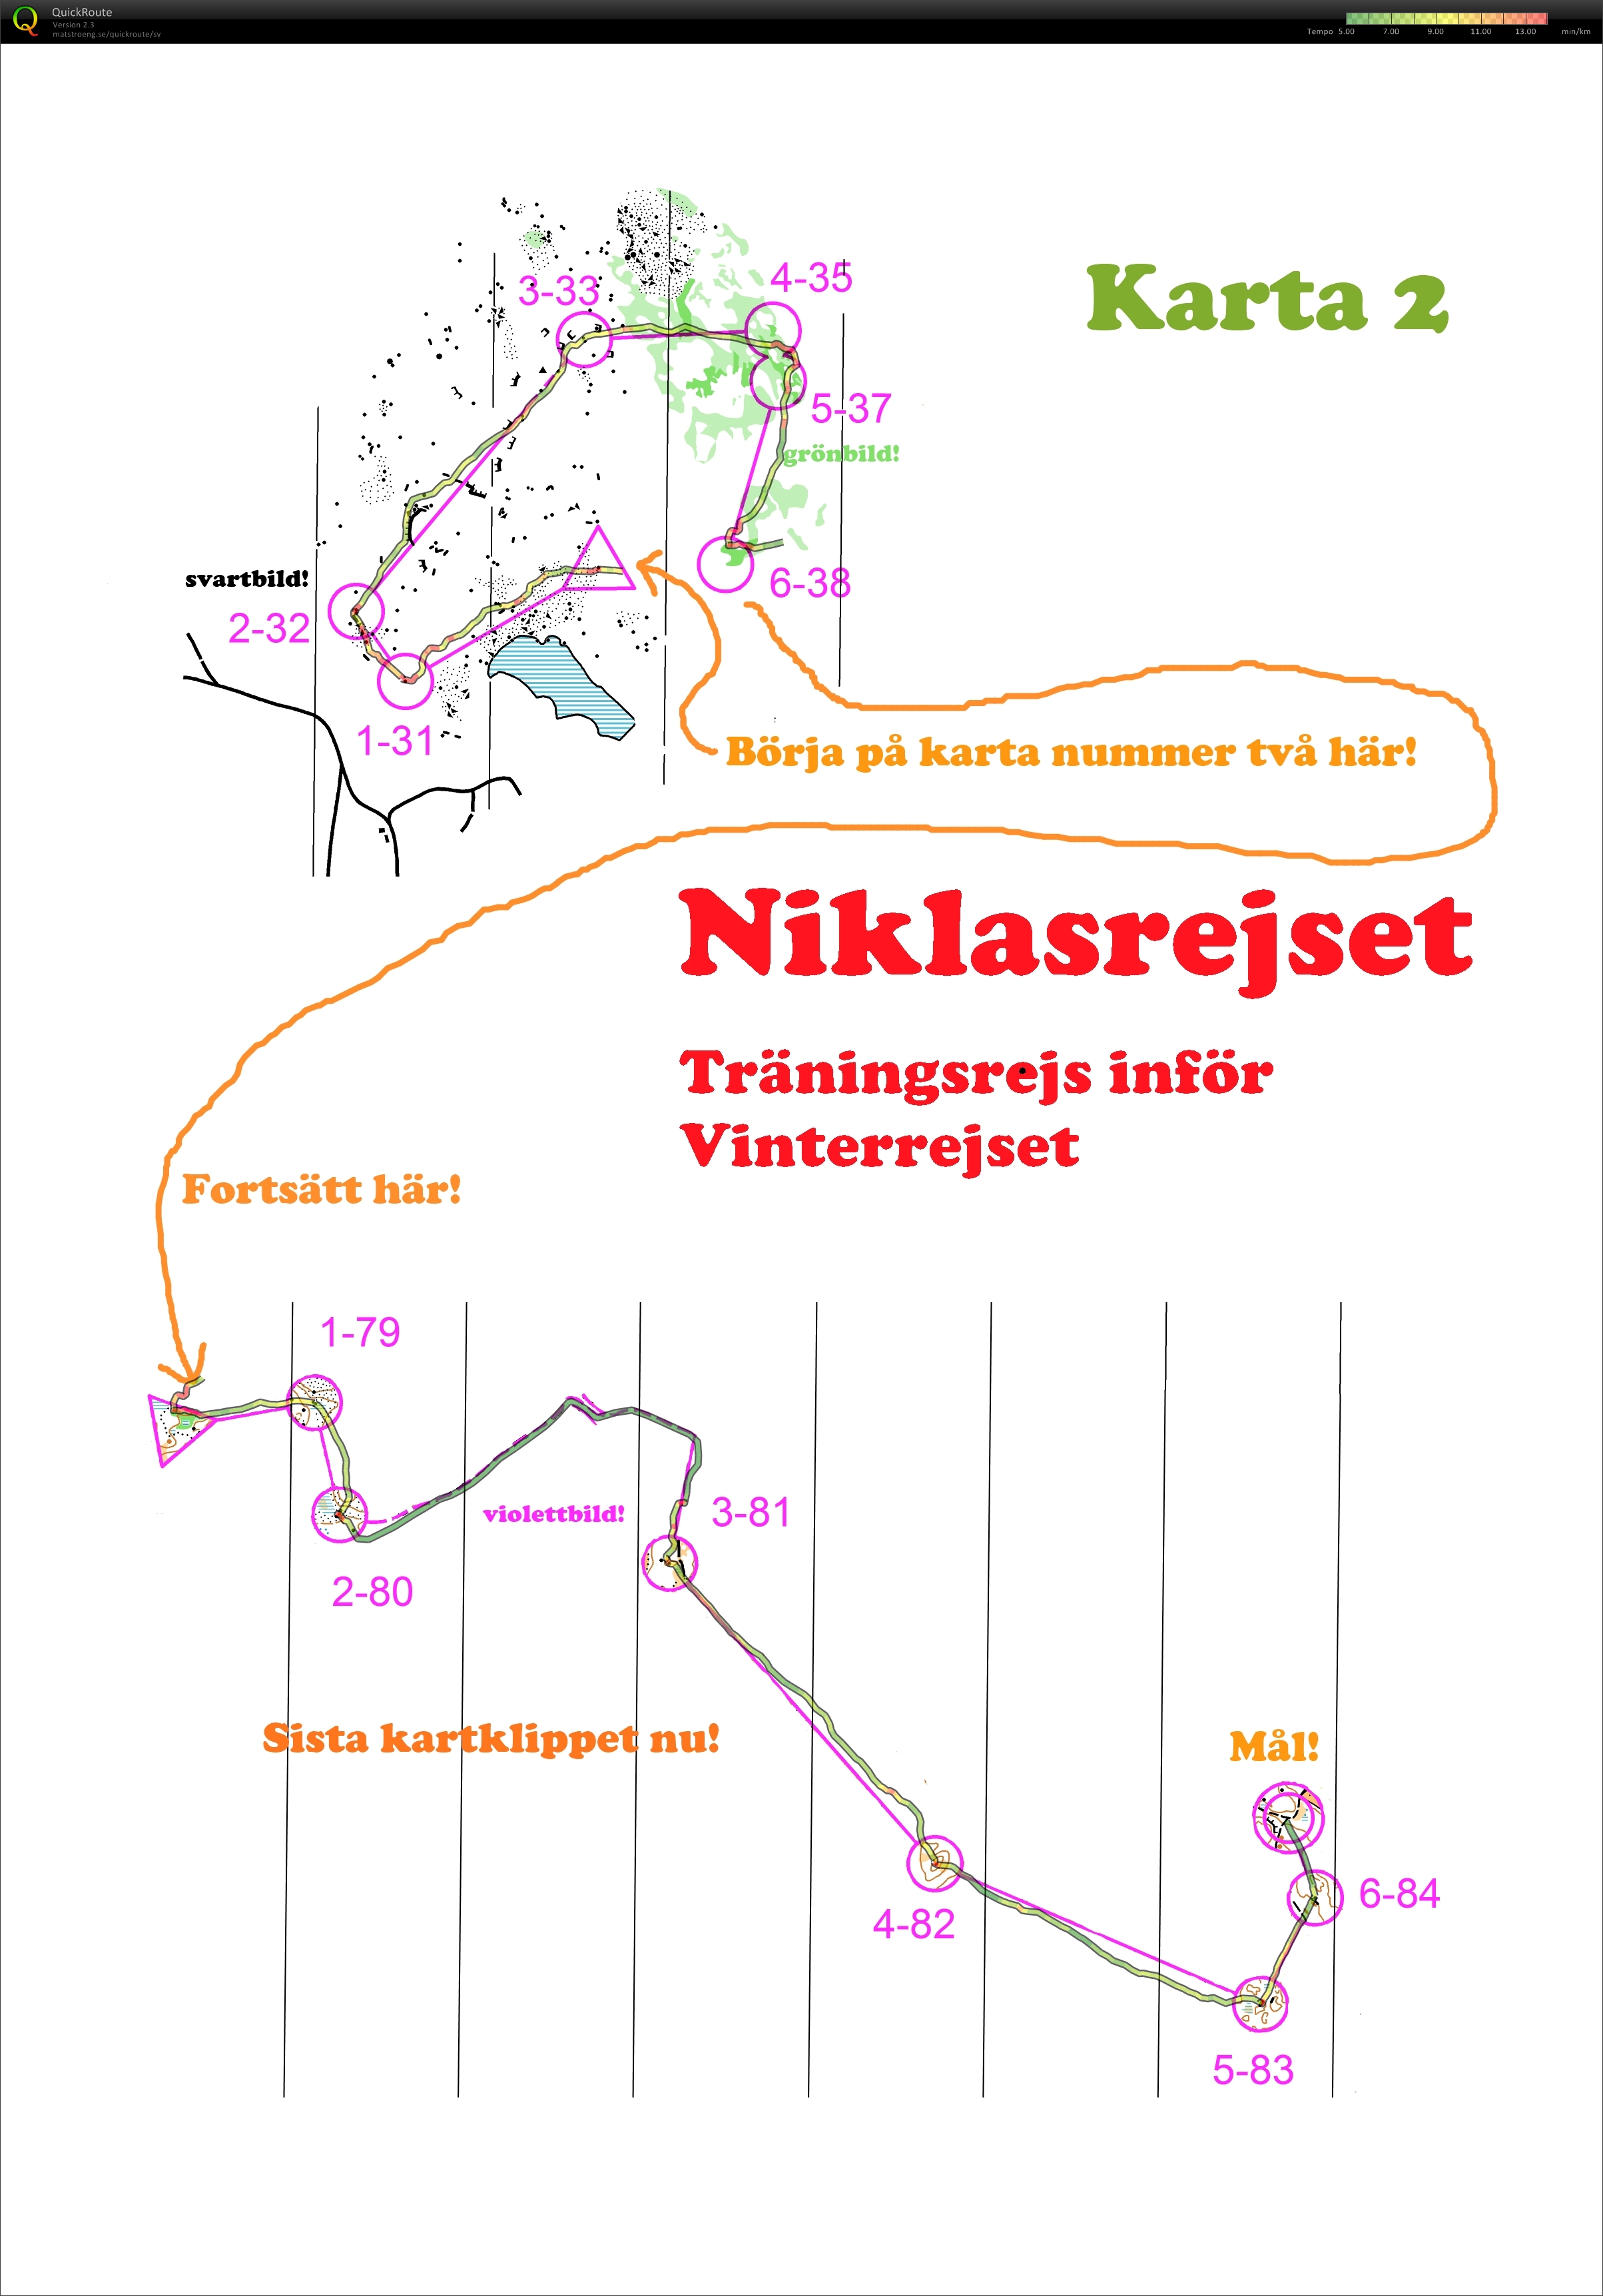 Niklasrejset - karta 2 (06.08.2011)